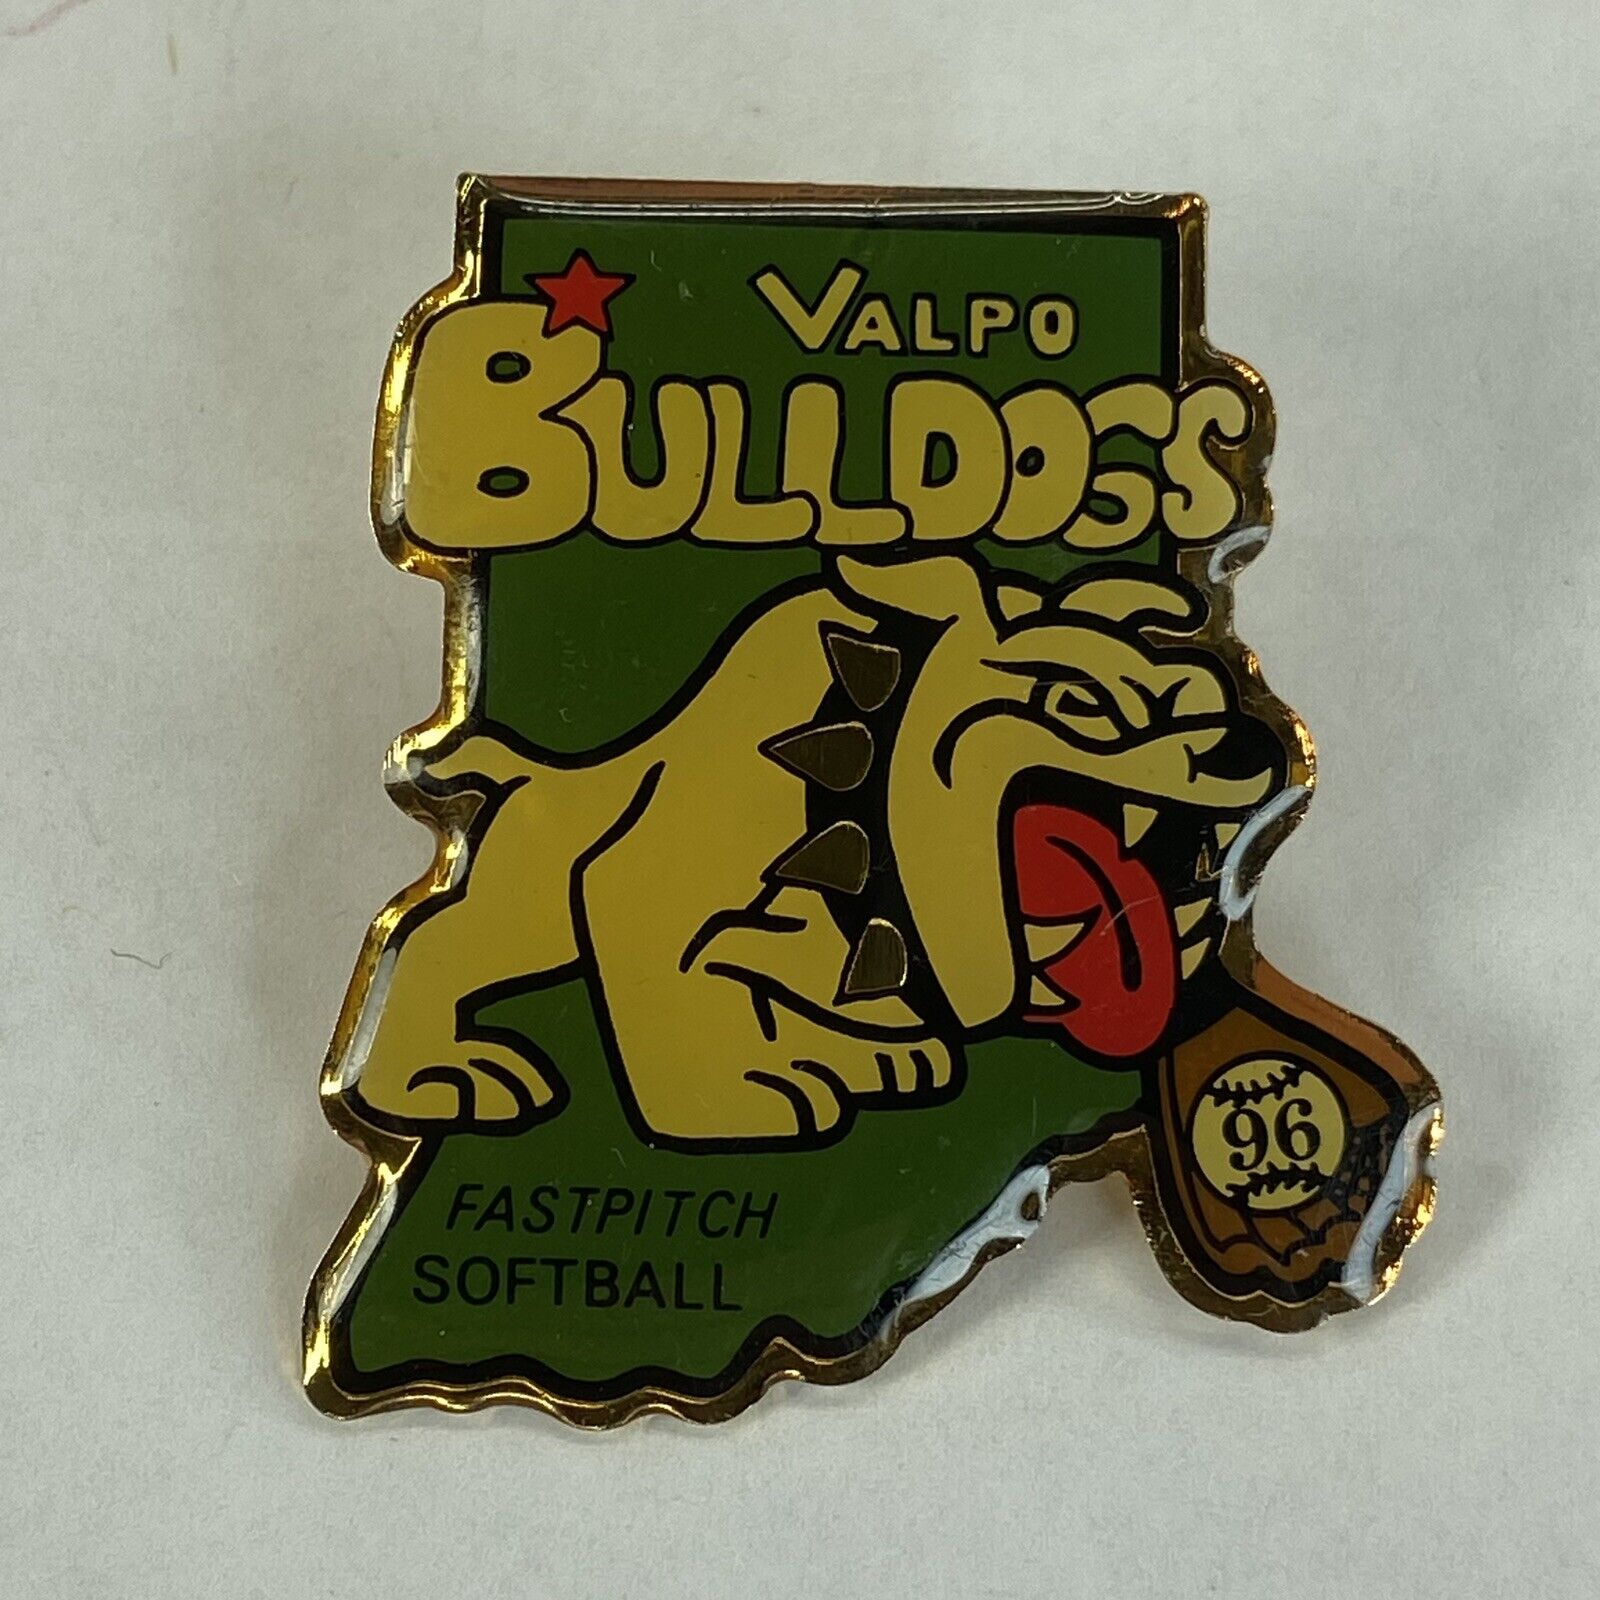 Vintage Valpo Bulldogs Indiana Girls Softball Fastpitch 1996 Hat Pin Lapel Pin